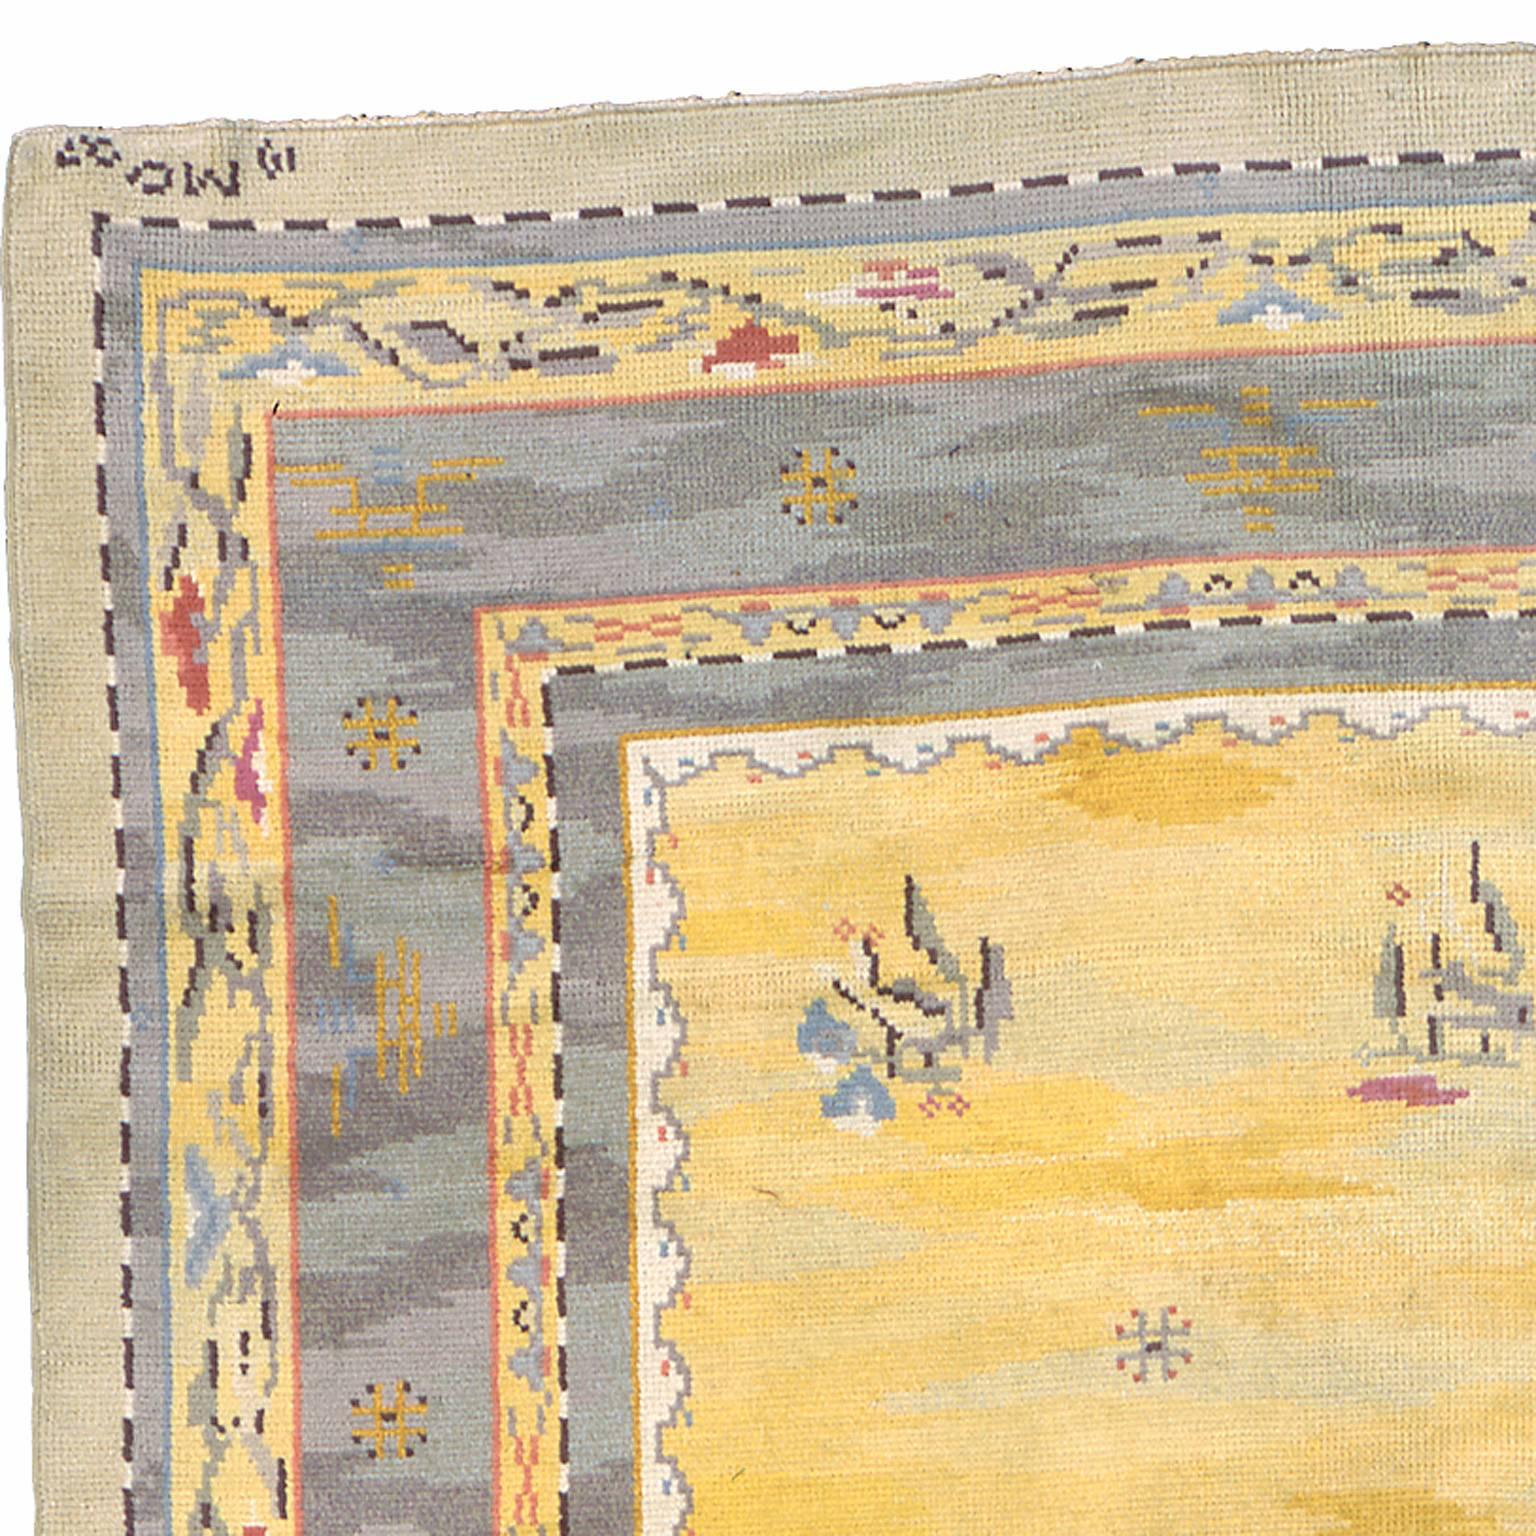 Early 20th century Swedish pile carpet. Initialed: 19 MG 27 (19 Martha Gahn 27).